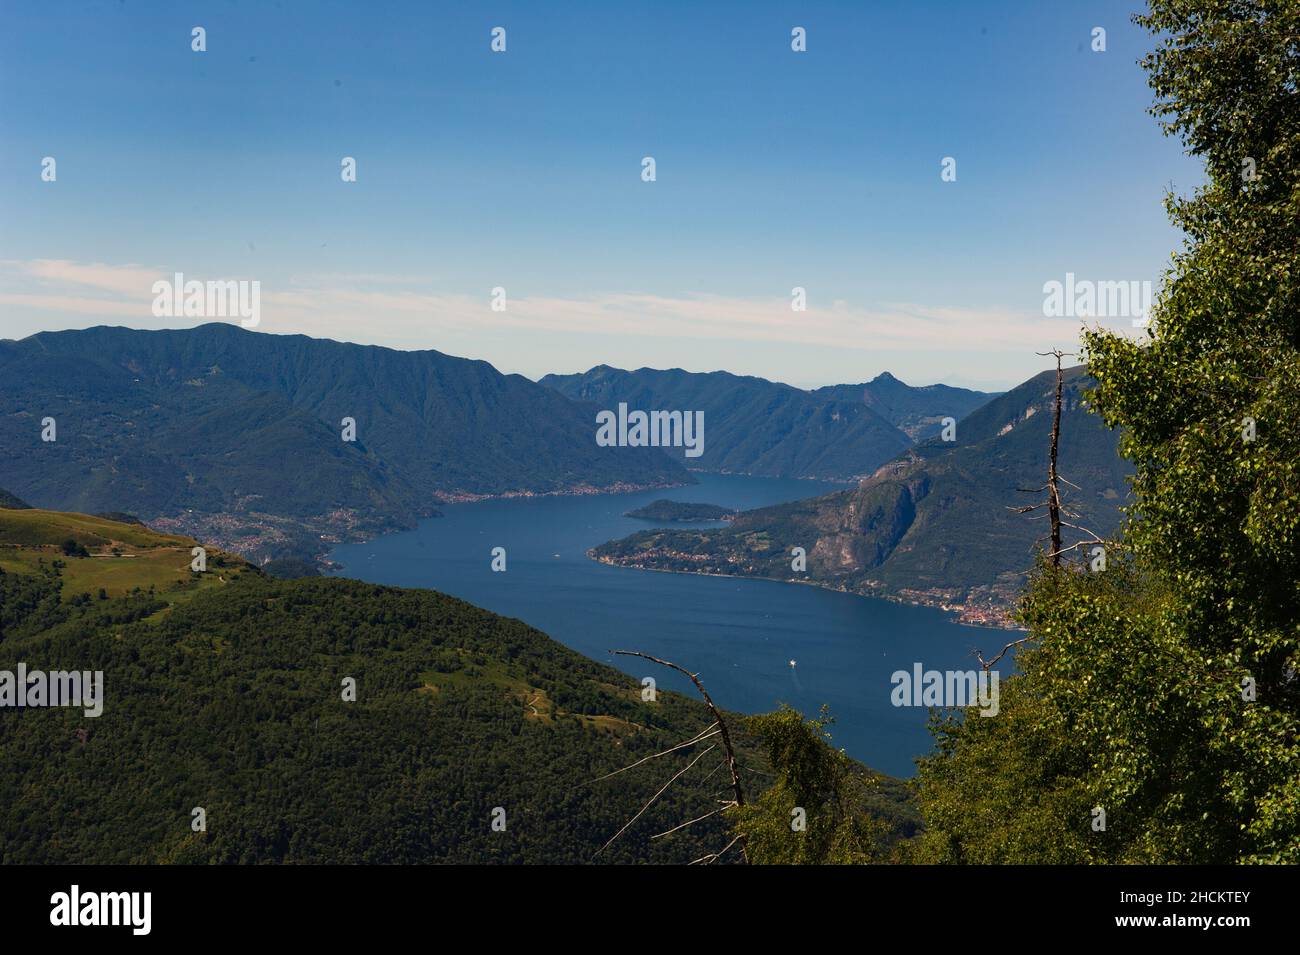 Europa, Italien, Lombardei, Provinz Lecco, Holzbank auf dem Gipfel des Monte Legnoncino mit Blick auf den Comer See. Stockfoto